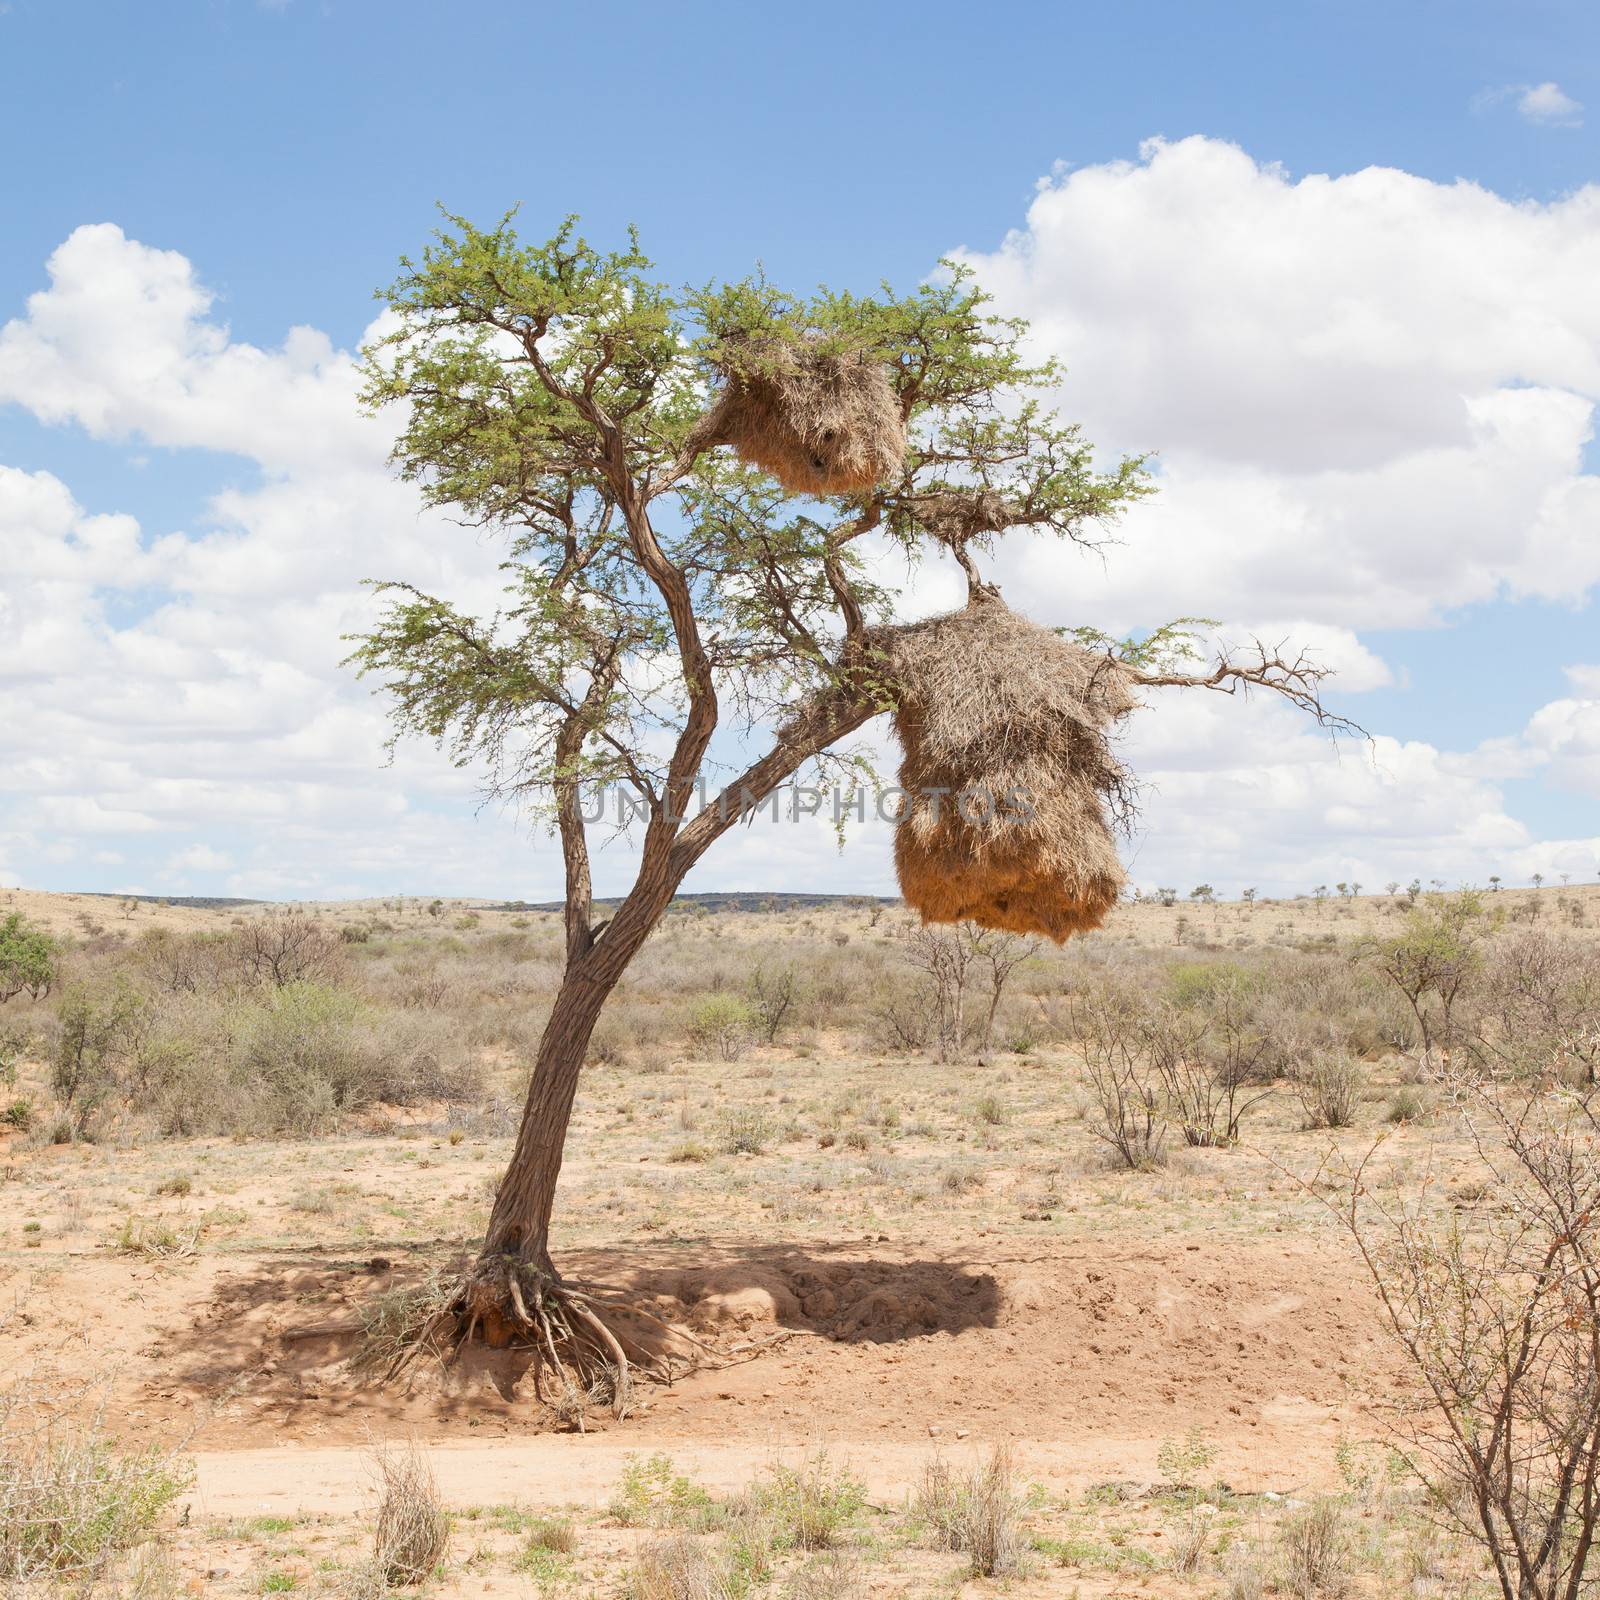 Weaver bird nest in Namibia, Africa by michaklootwijk